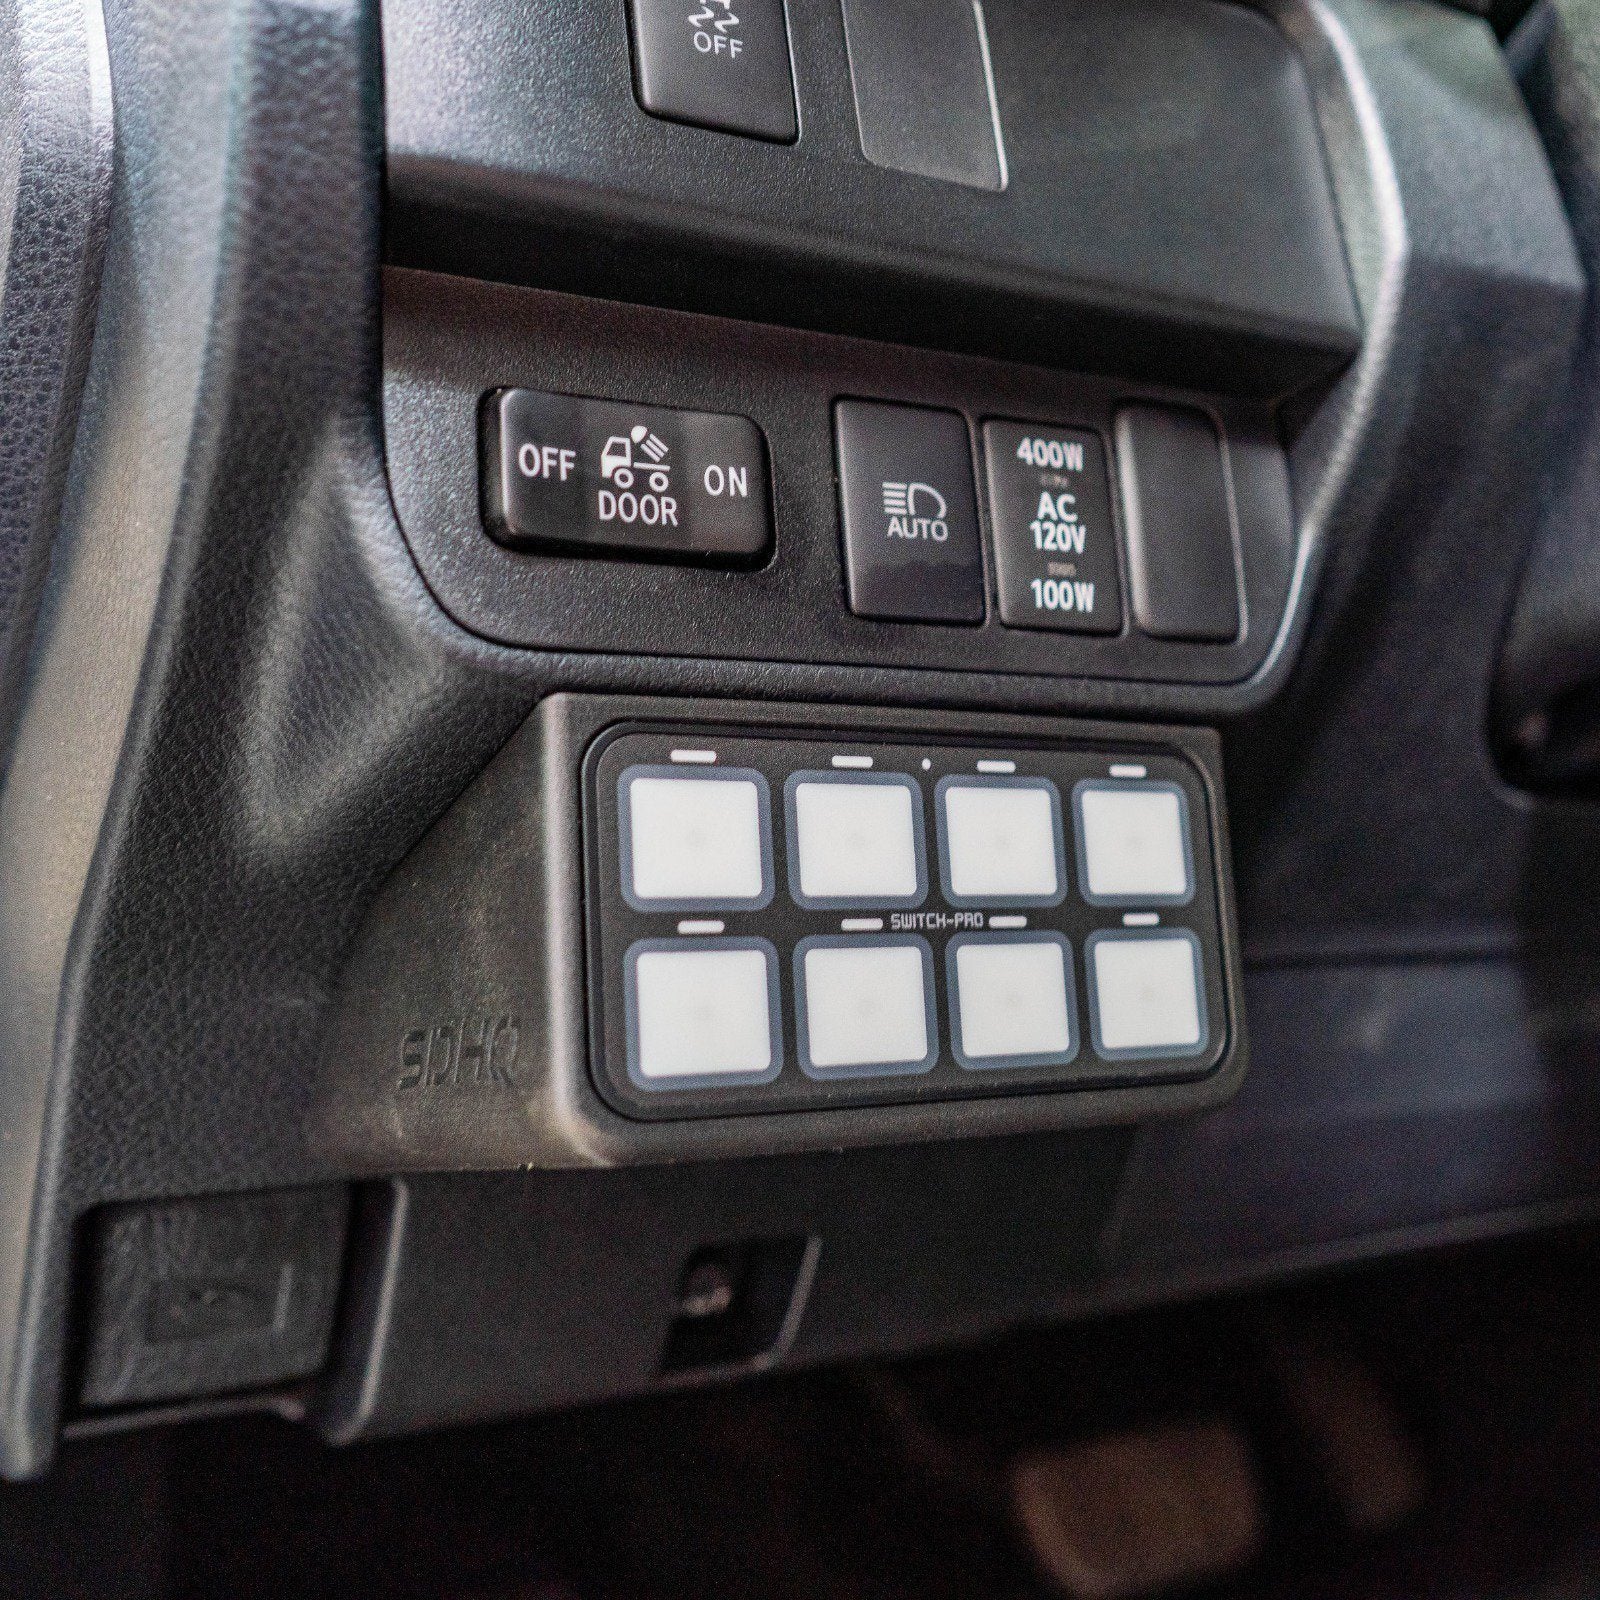 '16-23 Toyota Tacoma SDHQ Built Switch Pros SP-9100 Keypad Mount Lighting SDHQ Off Road display